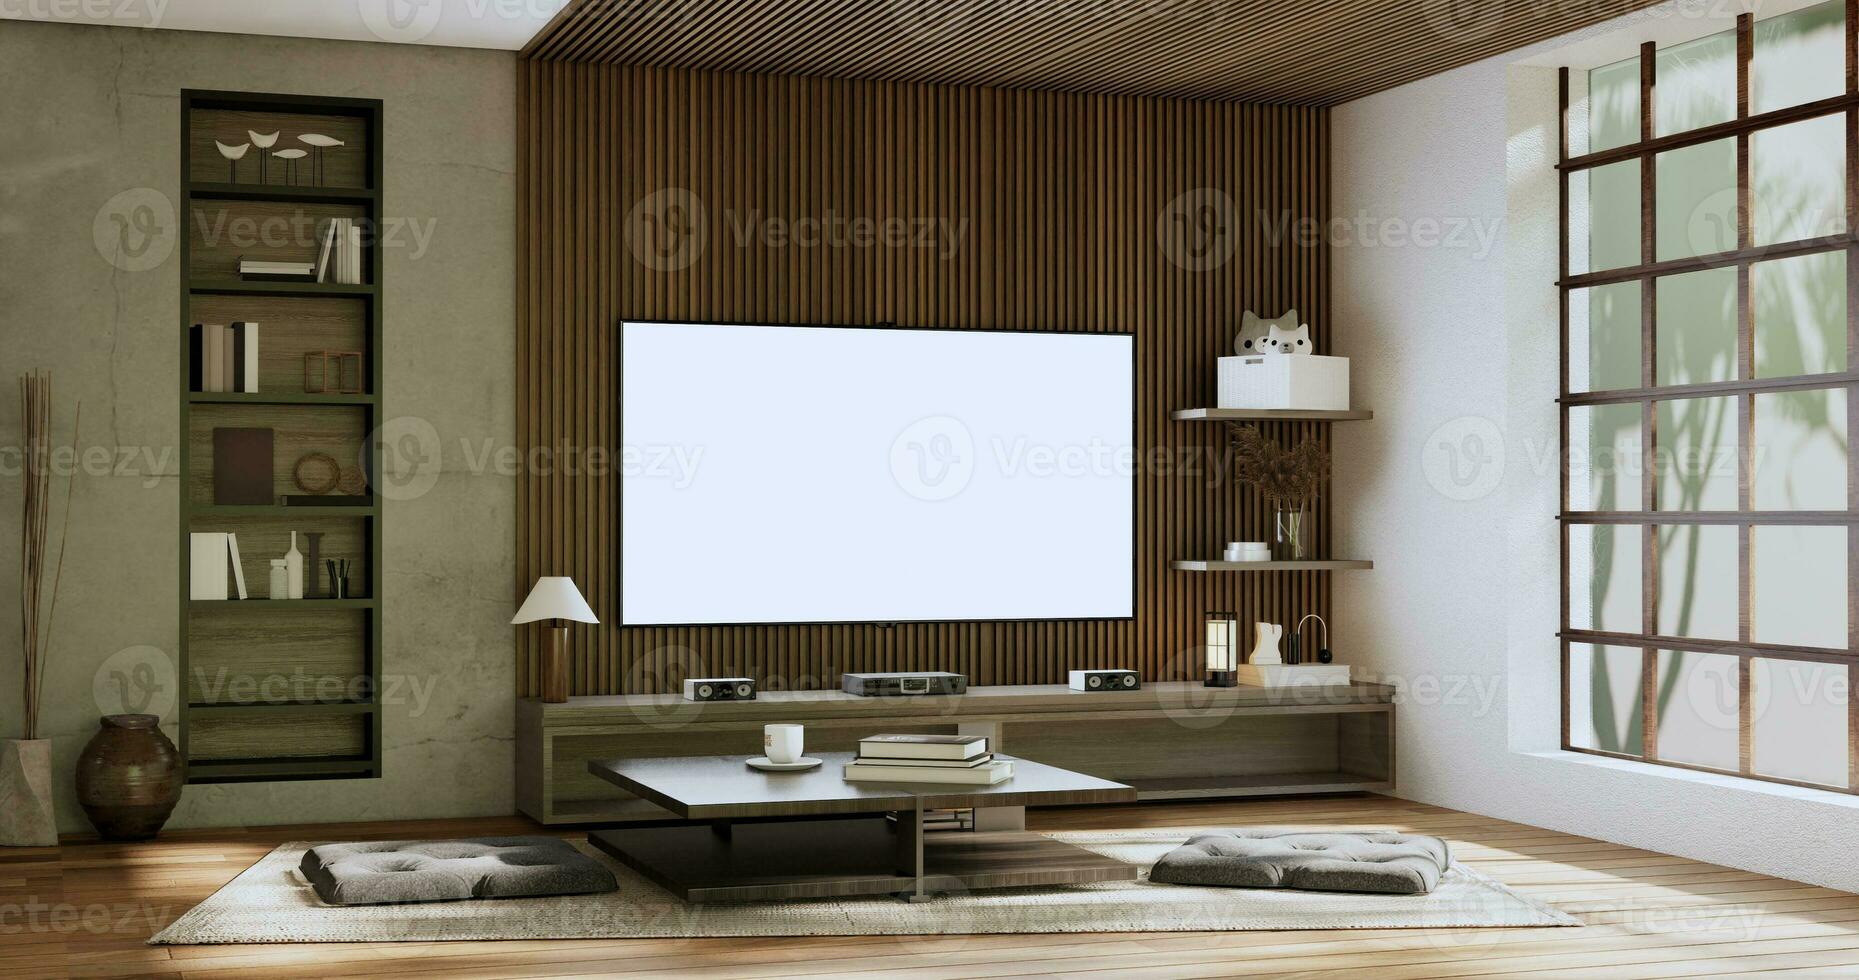 cabinet tv wooden japanese design on room minimal interior.3D rendering photo